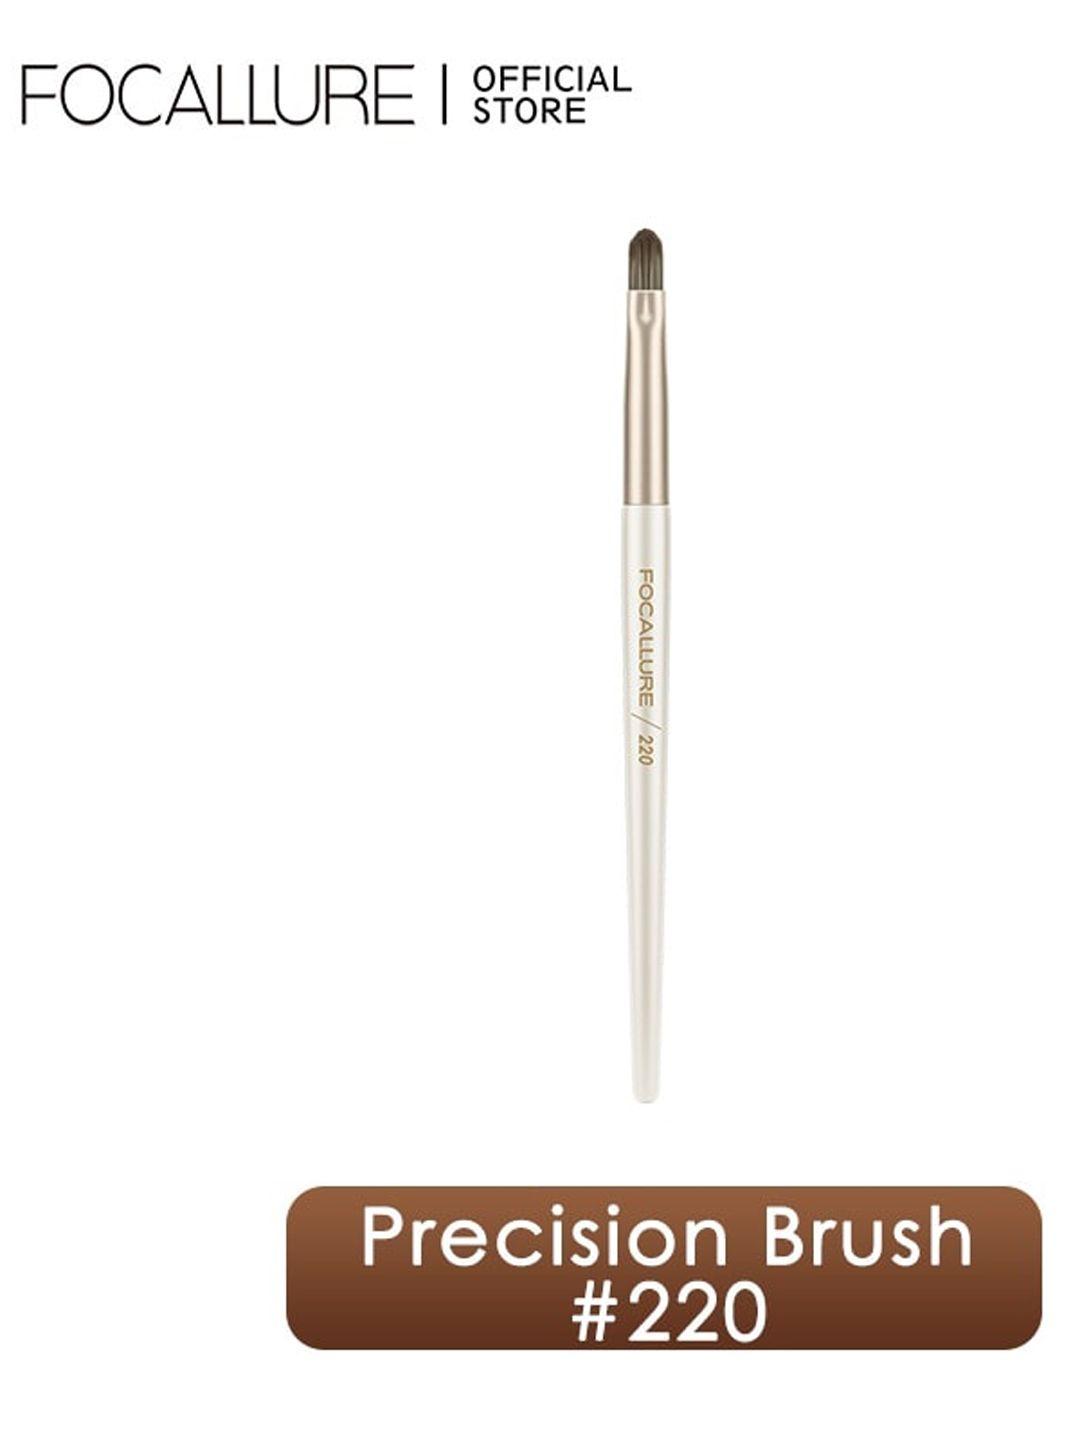 focallure matte aluminum ferrule precision detail makeup brush 220 - gold toned